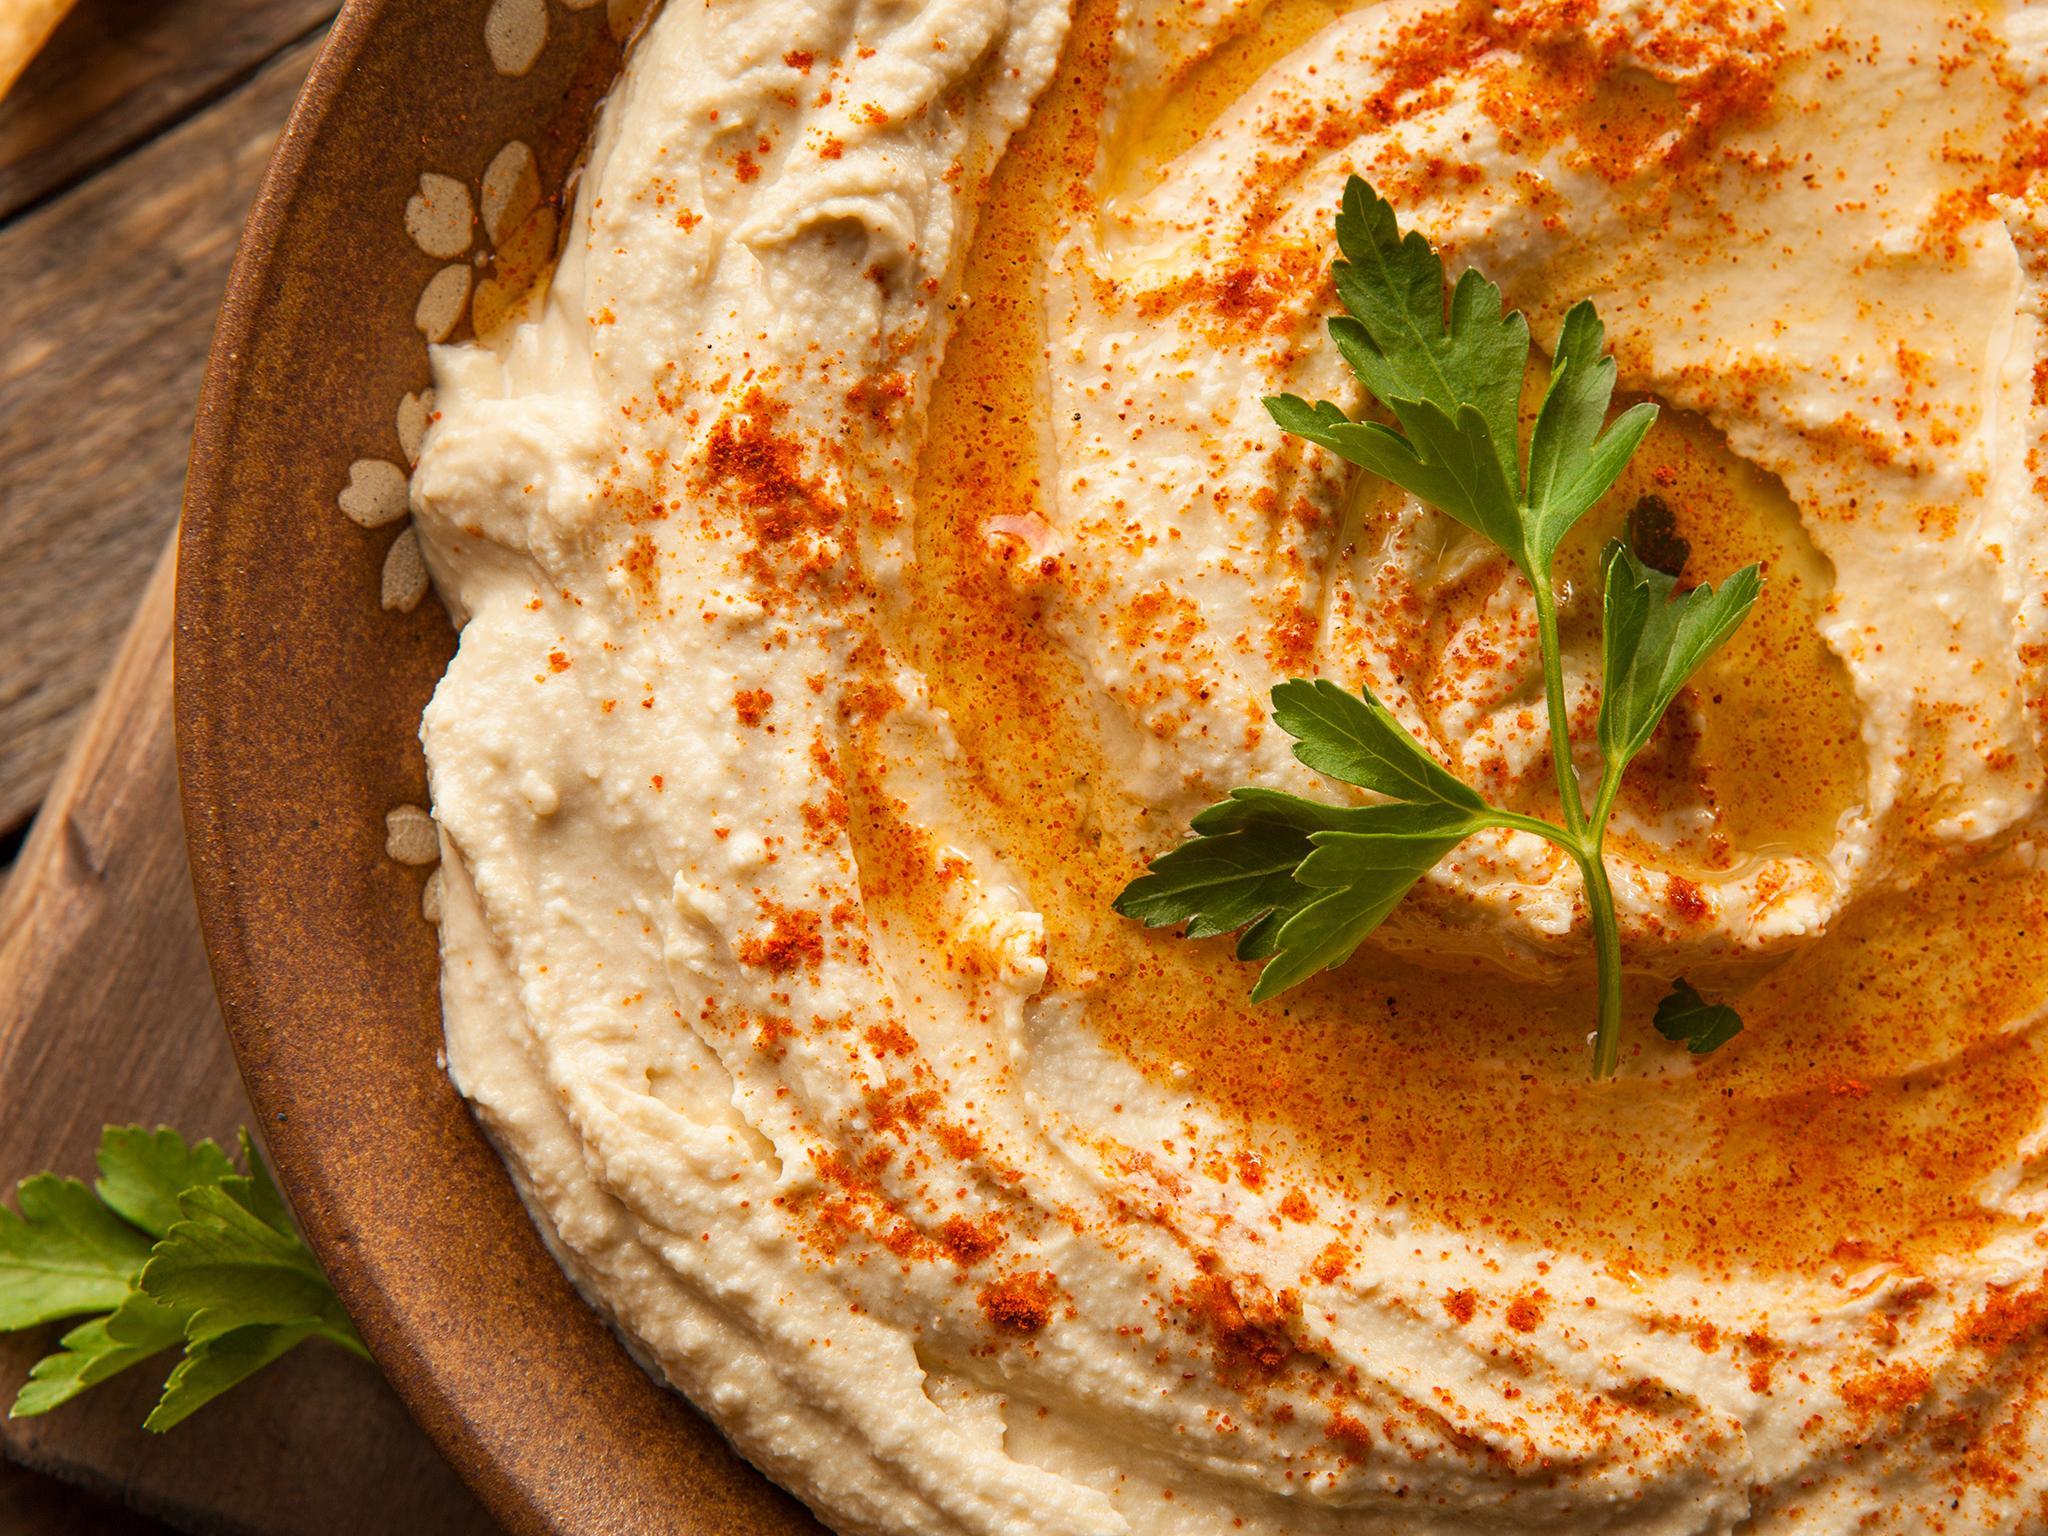 The Best Oil, Sugar and Salt free Hummus Recopies